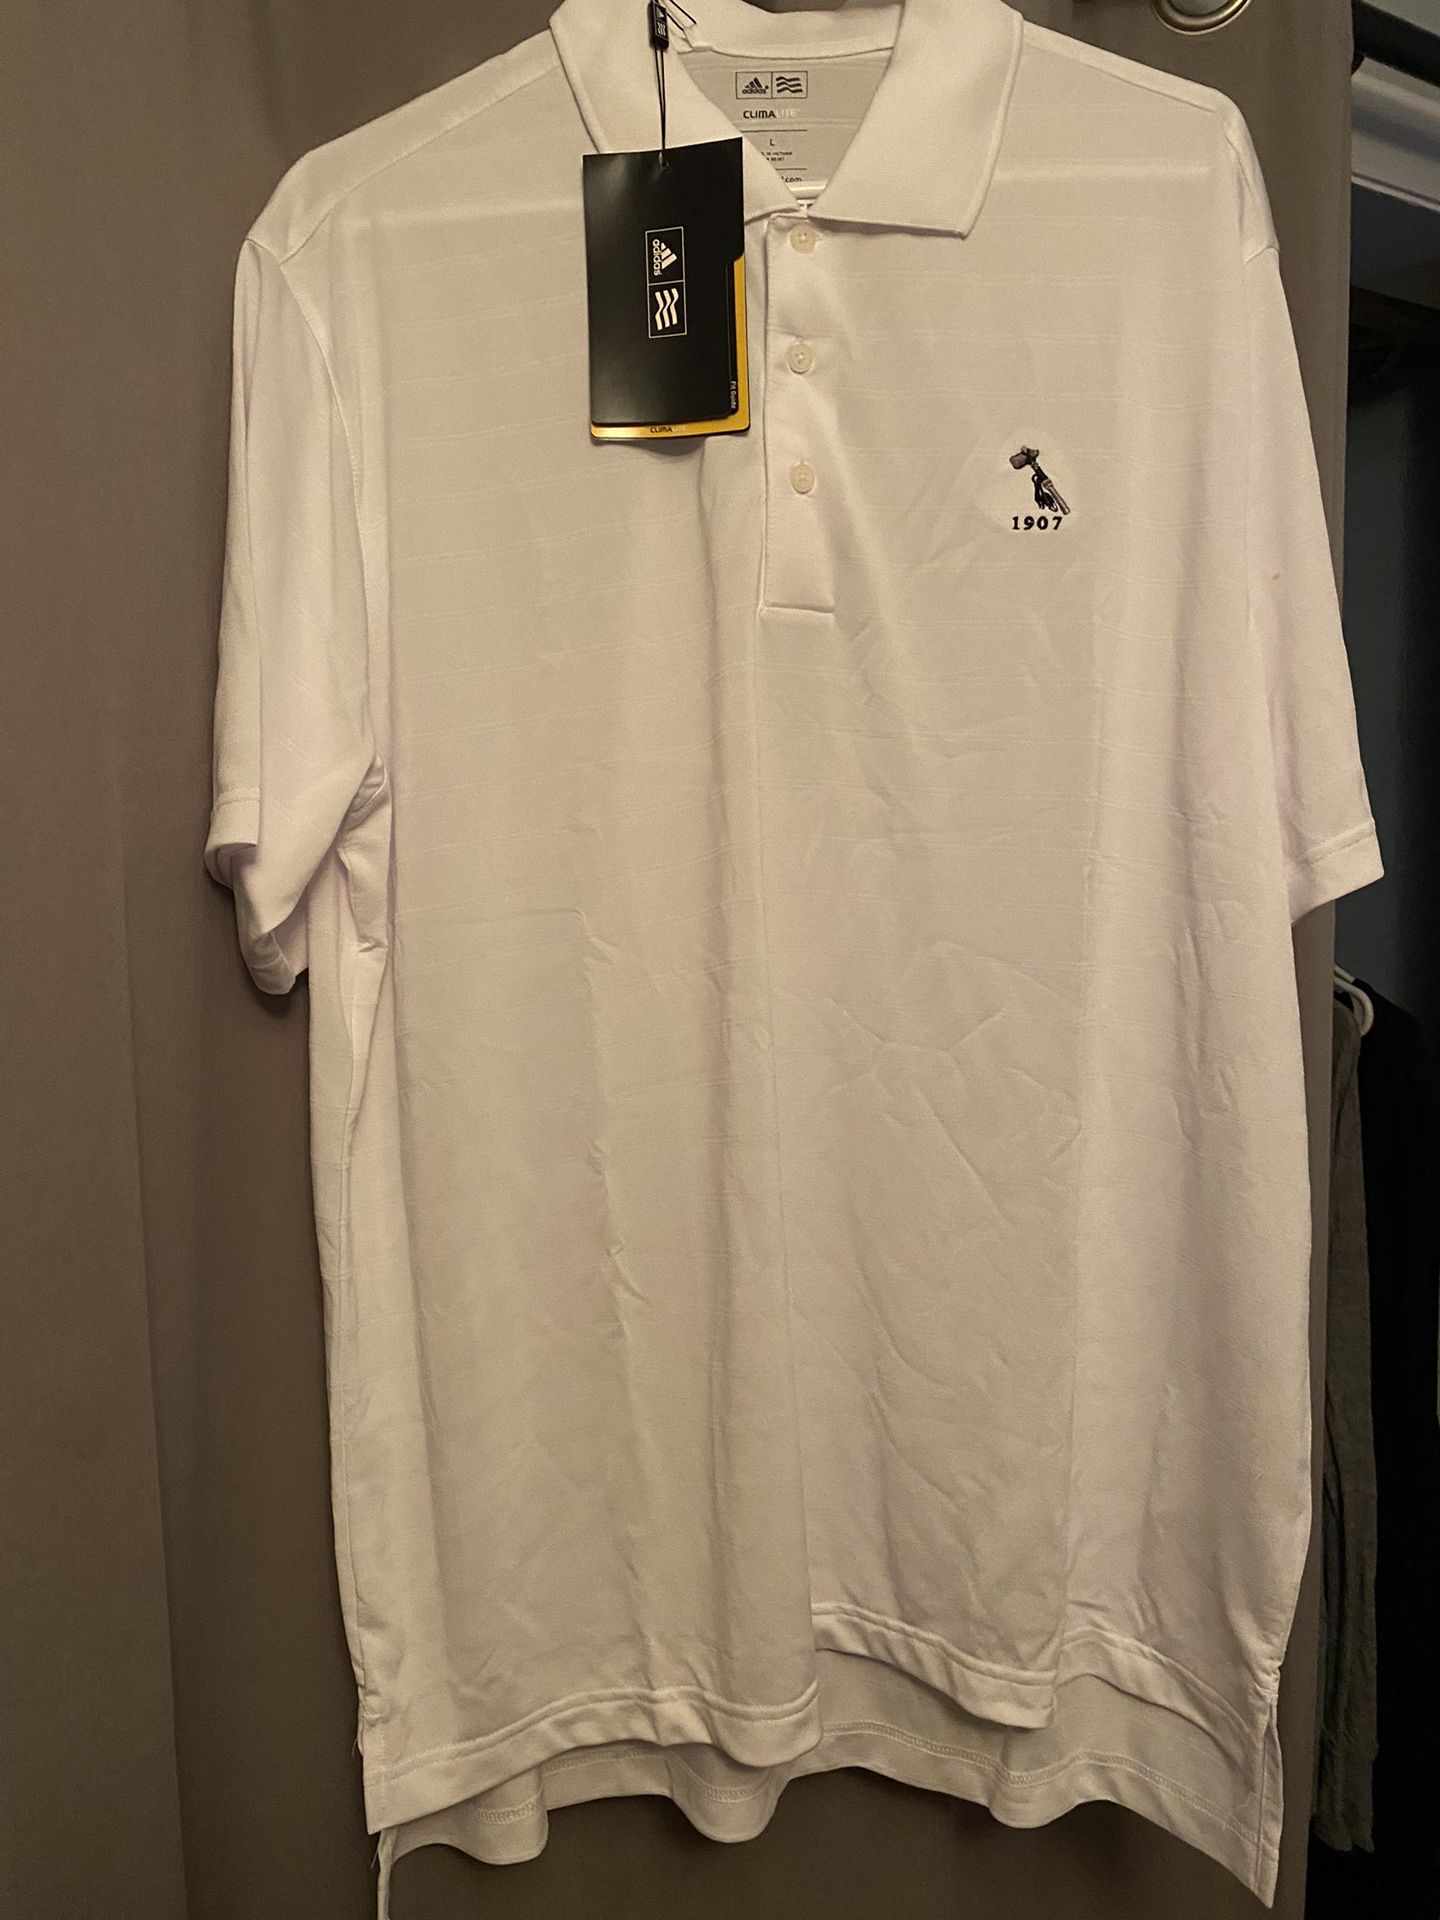 NWT Men’s Adidas Polo Golf Shirt